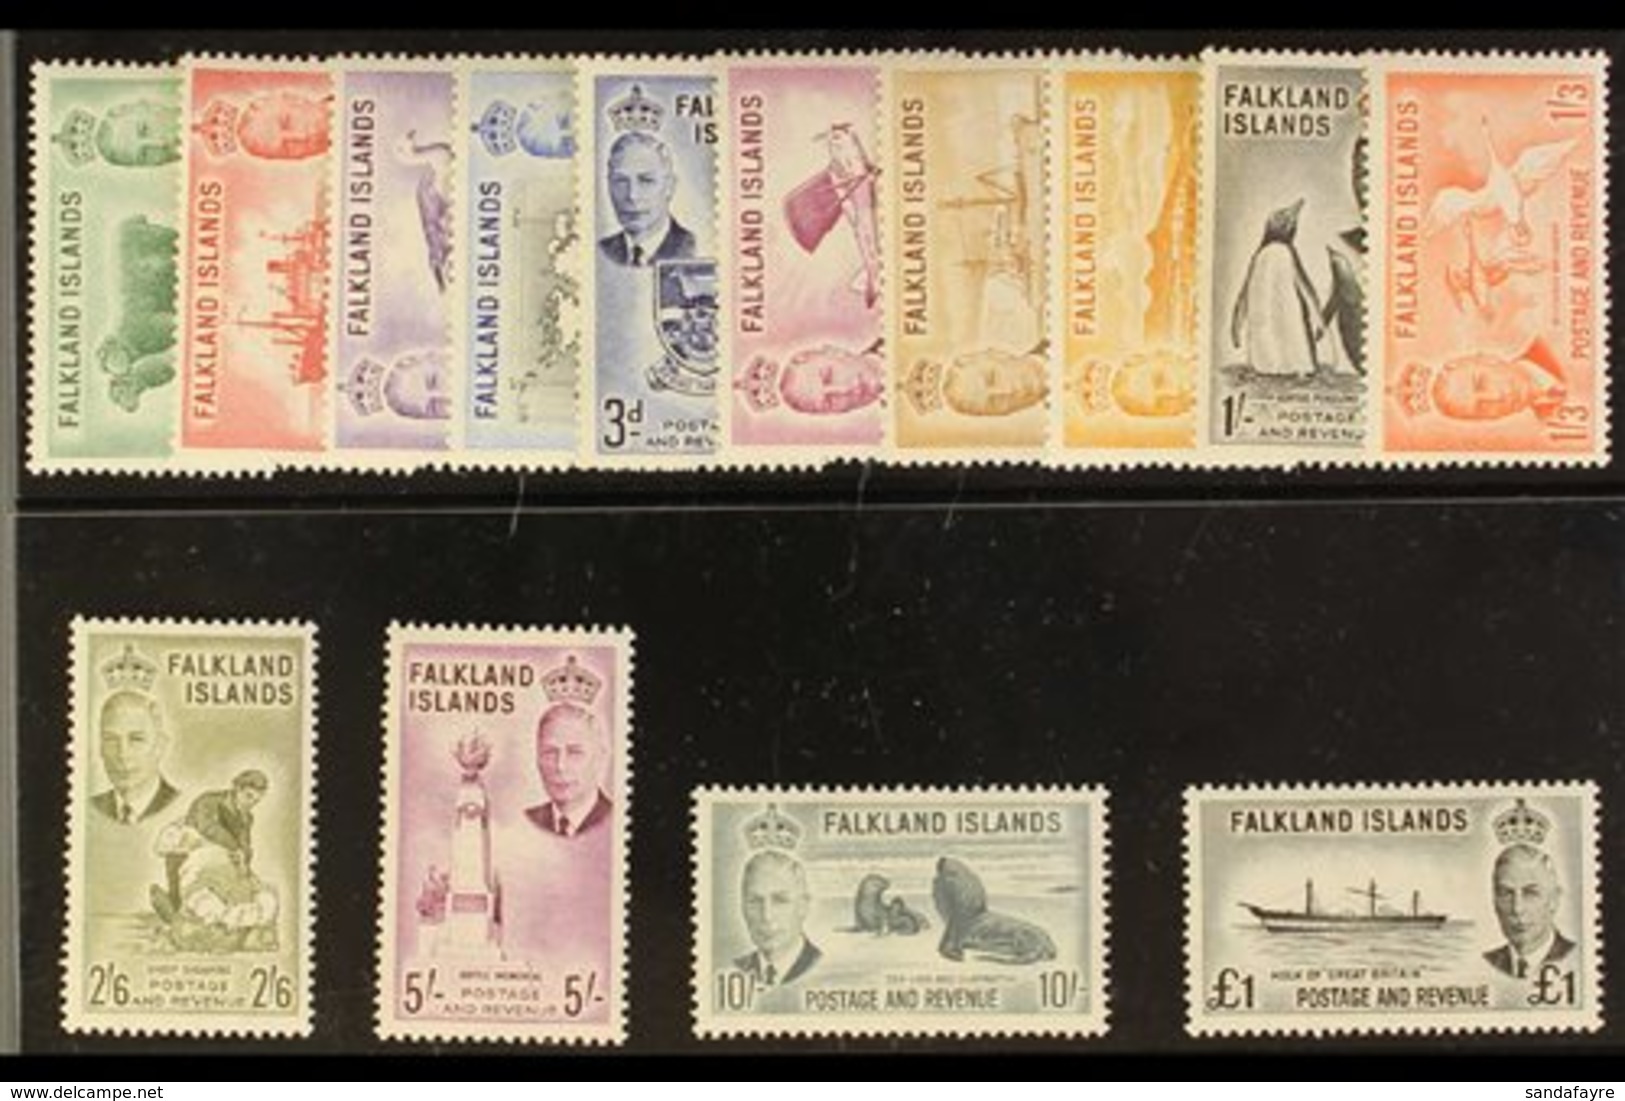 1952 KGVI Definitives Complete Set, SG 172/85, Very Fine Never Hinged Mint. (14 Stamps) For More Images, Please Visit Ht - Falkland Islands